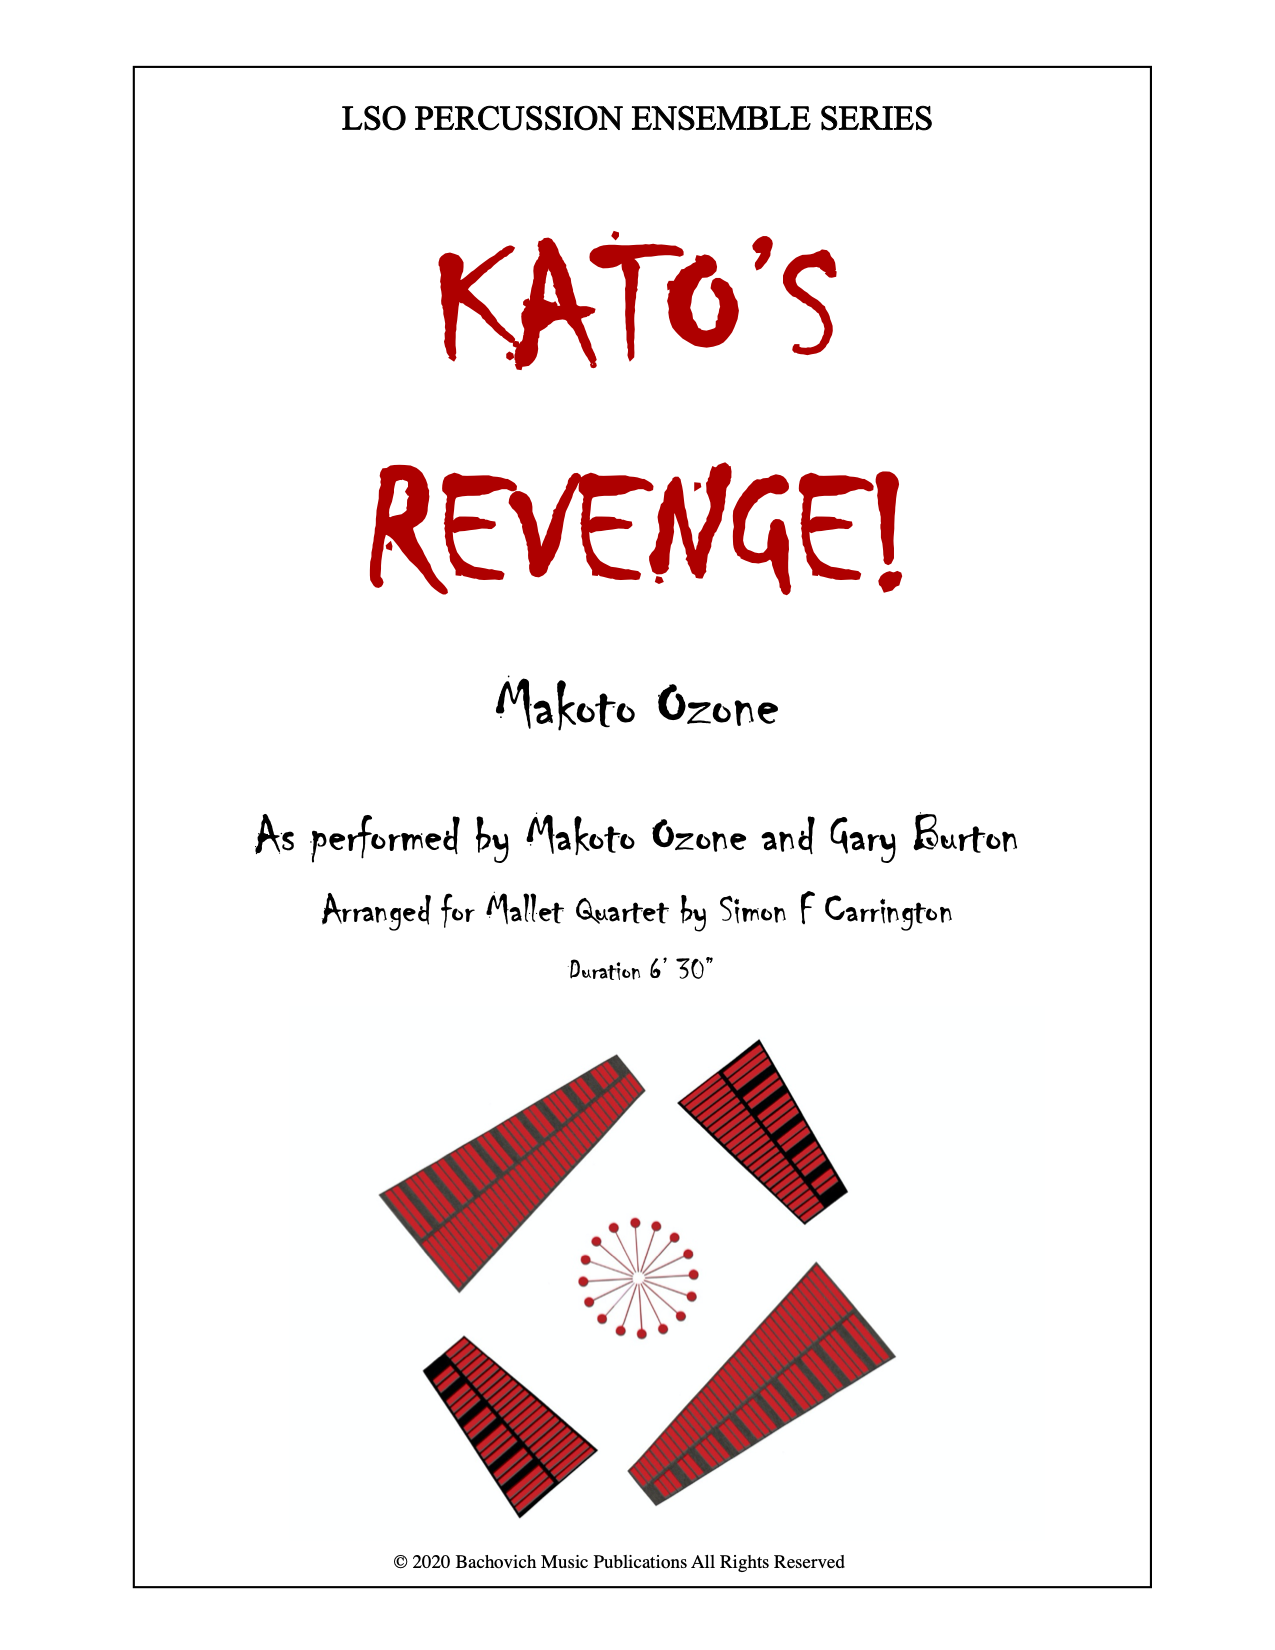 Kato's Revenge by Ozone arr. Simon Carrington